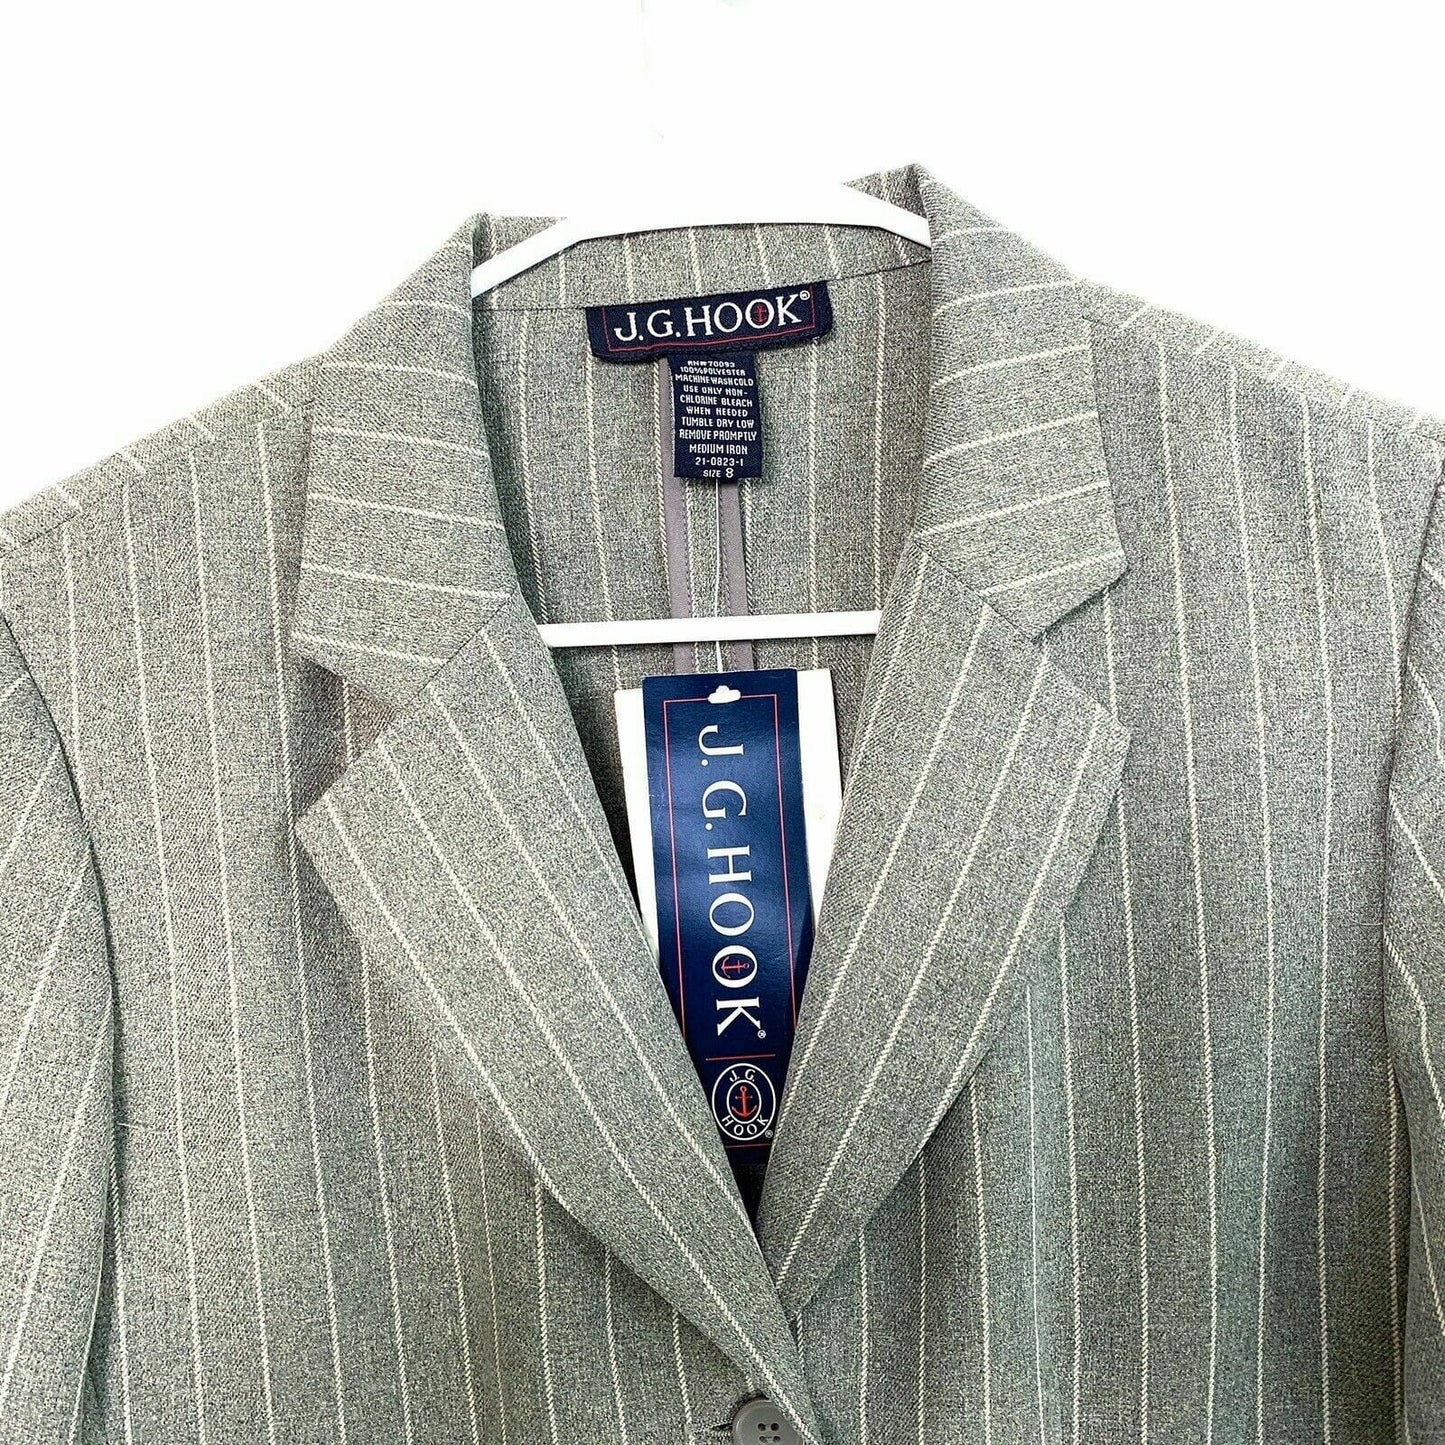 JG HOOK Womens Size 8 Gray Striped Blazer Jacket Lined Suit 3 Button